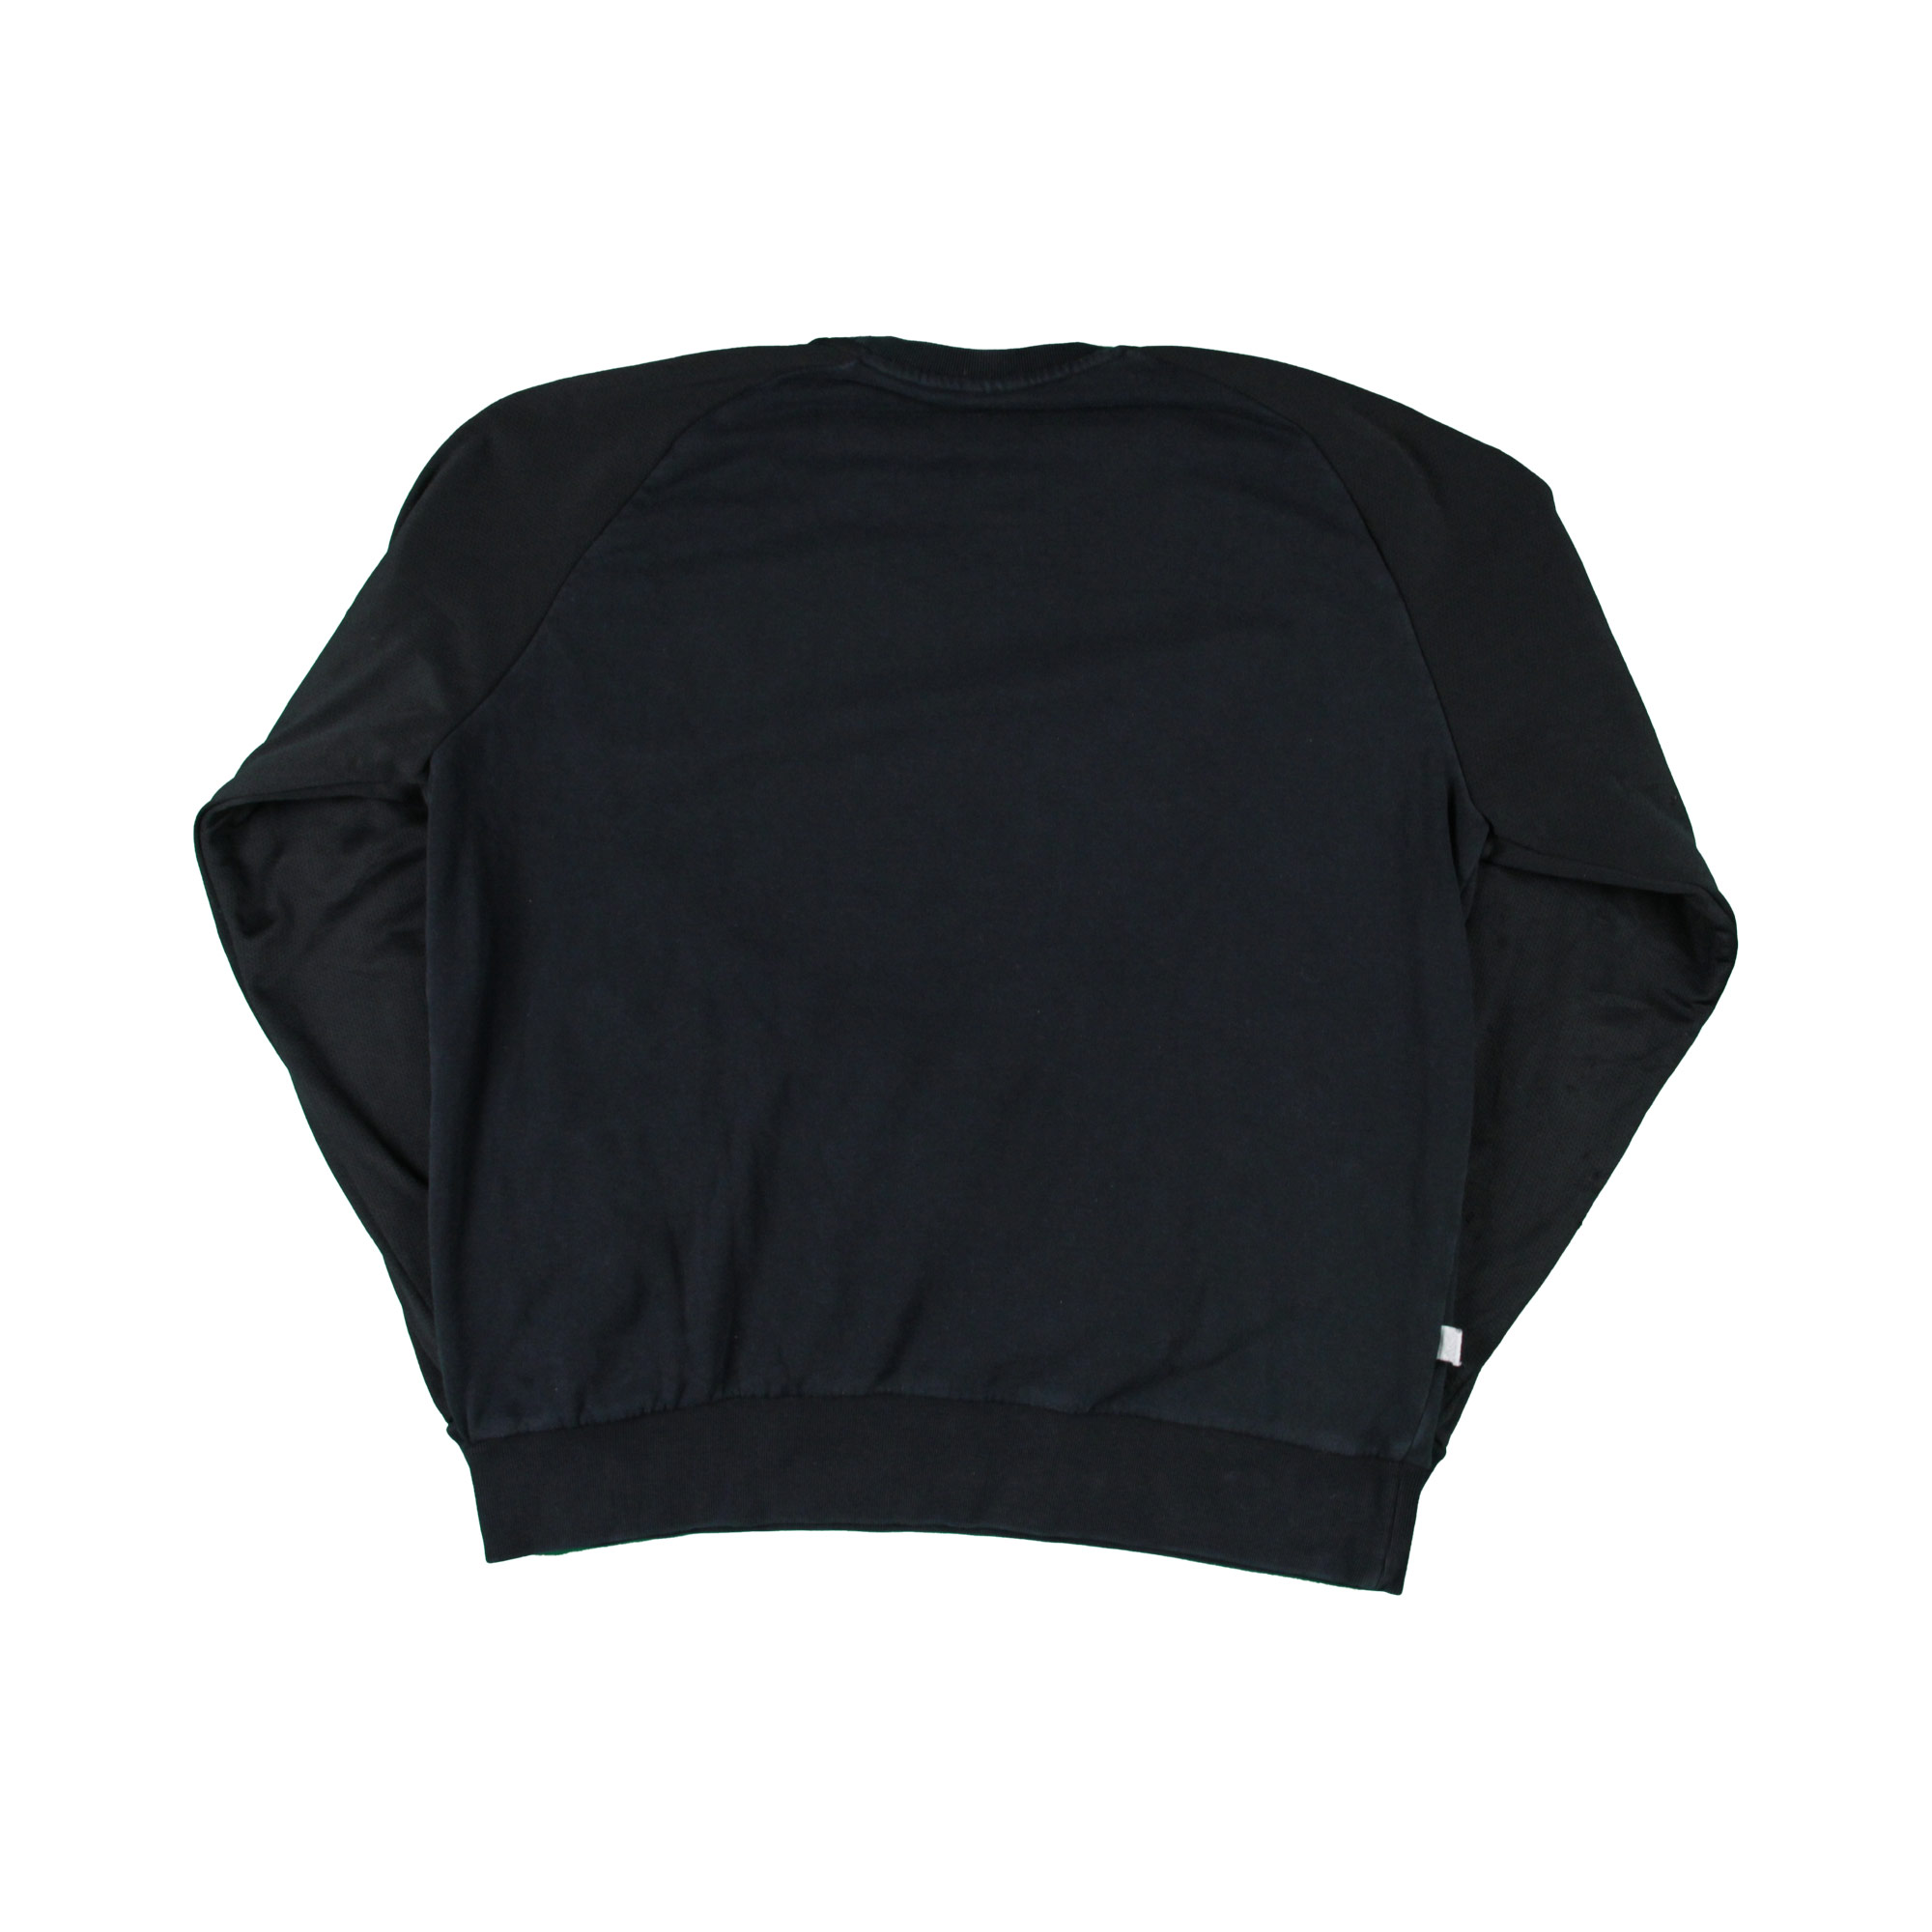 Jordan Black Sweatshirt -XL